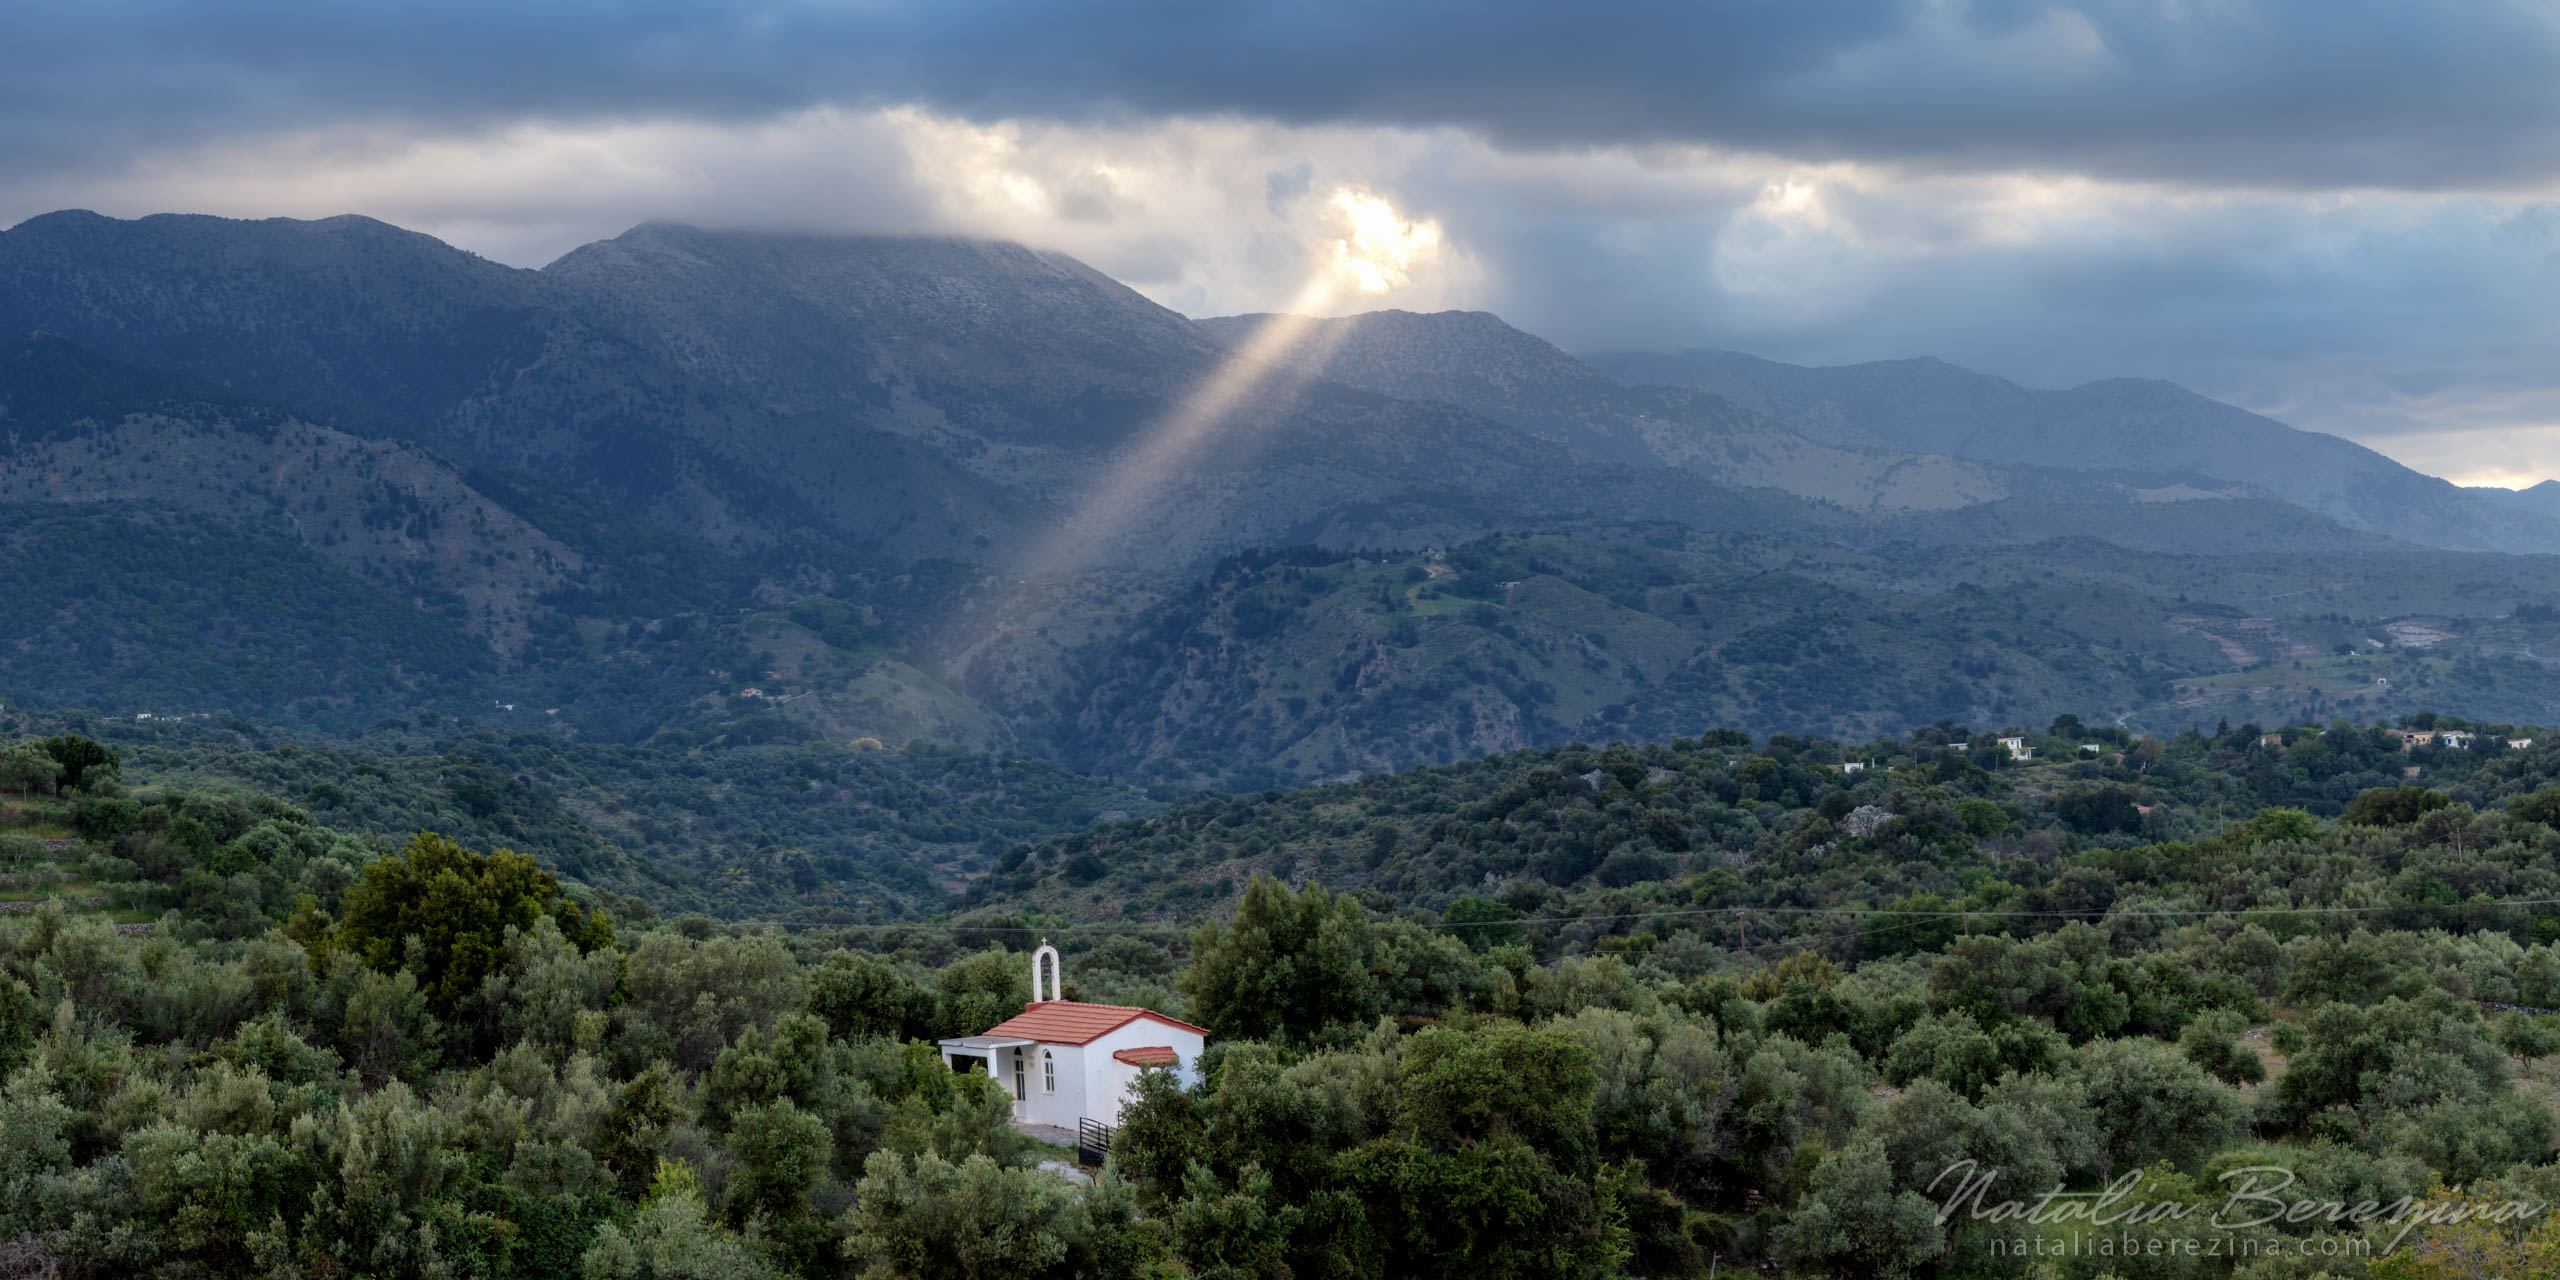 Greece, Crete, landscape, sunlight, church, 2x1 CR1-NB0B4A9608-P - Crete, Greece - Natalia Berezina Photography